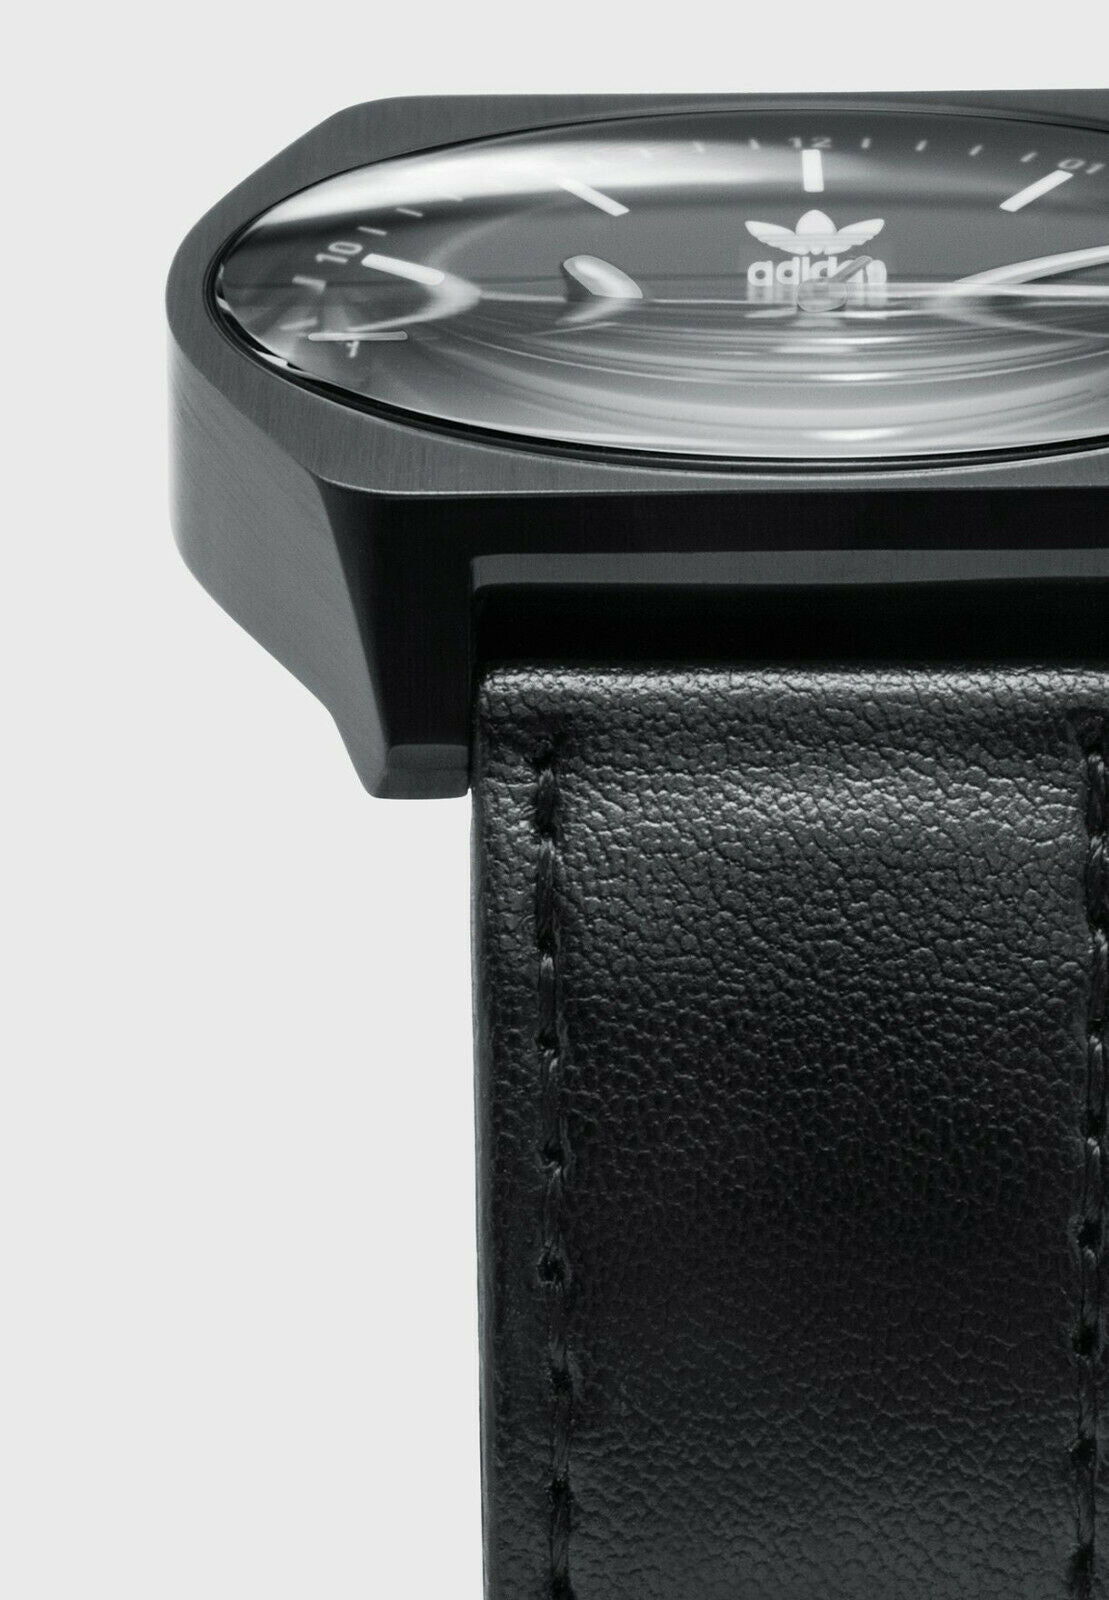 Adidas Originals Process L1 - Uhr - all black - Art. Z05-756 - Ø 38mm